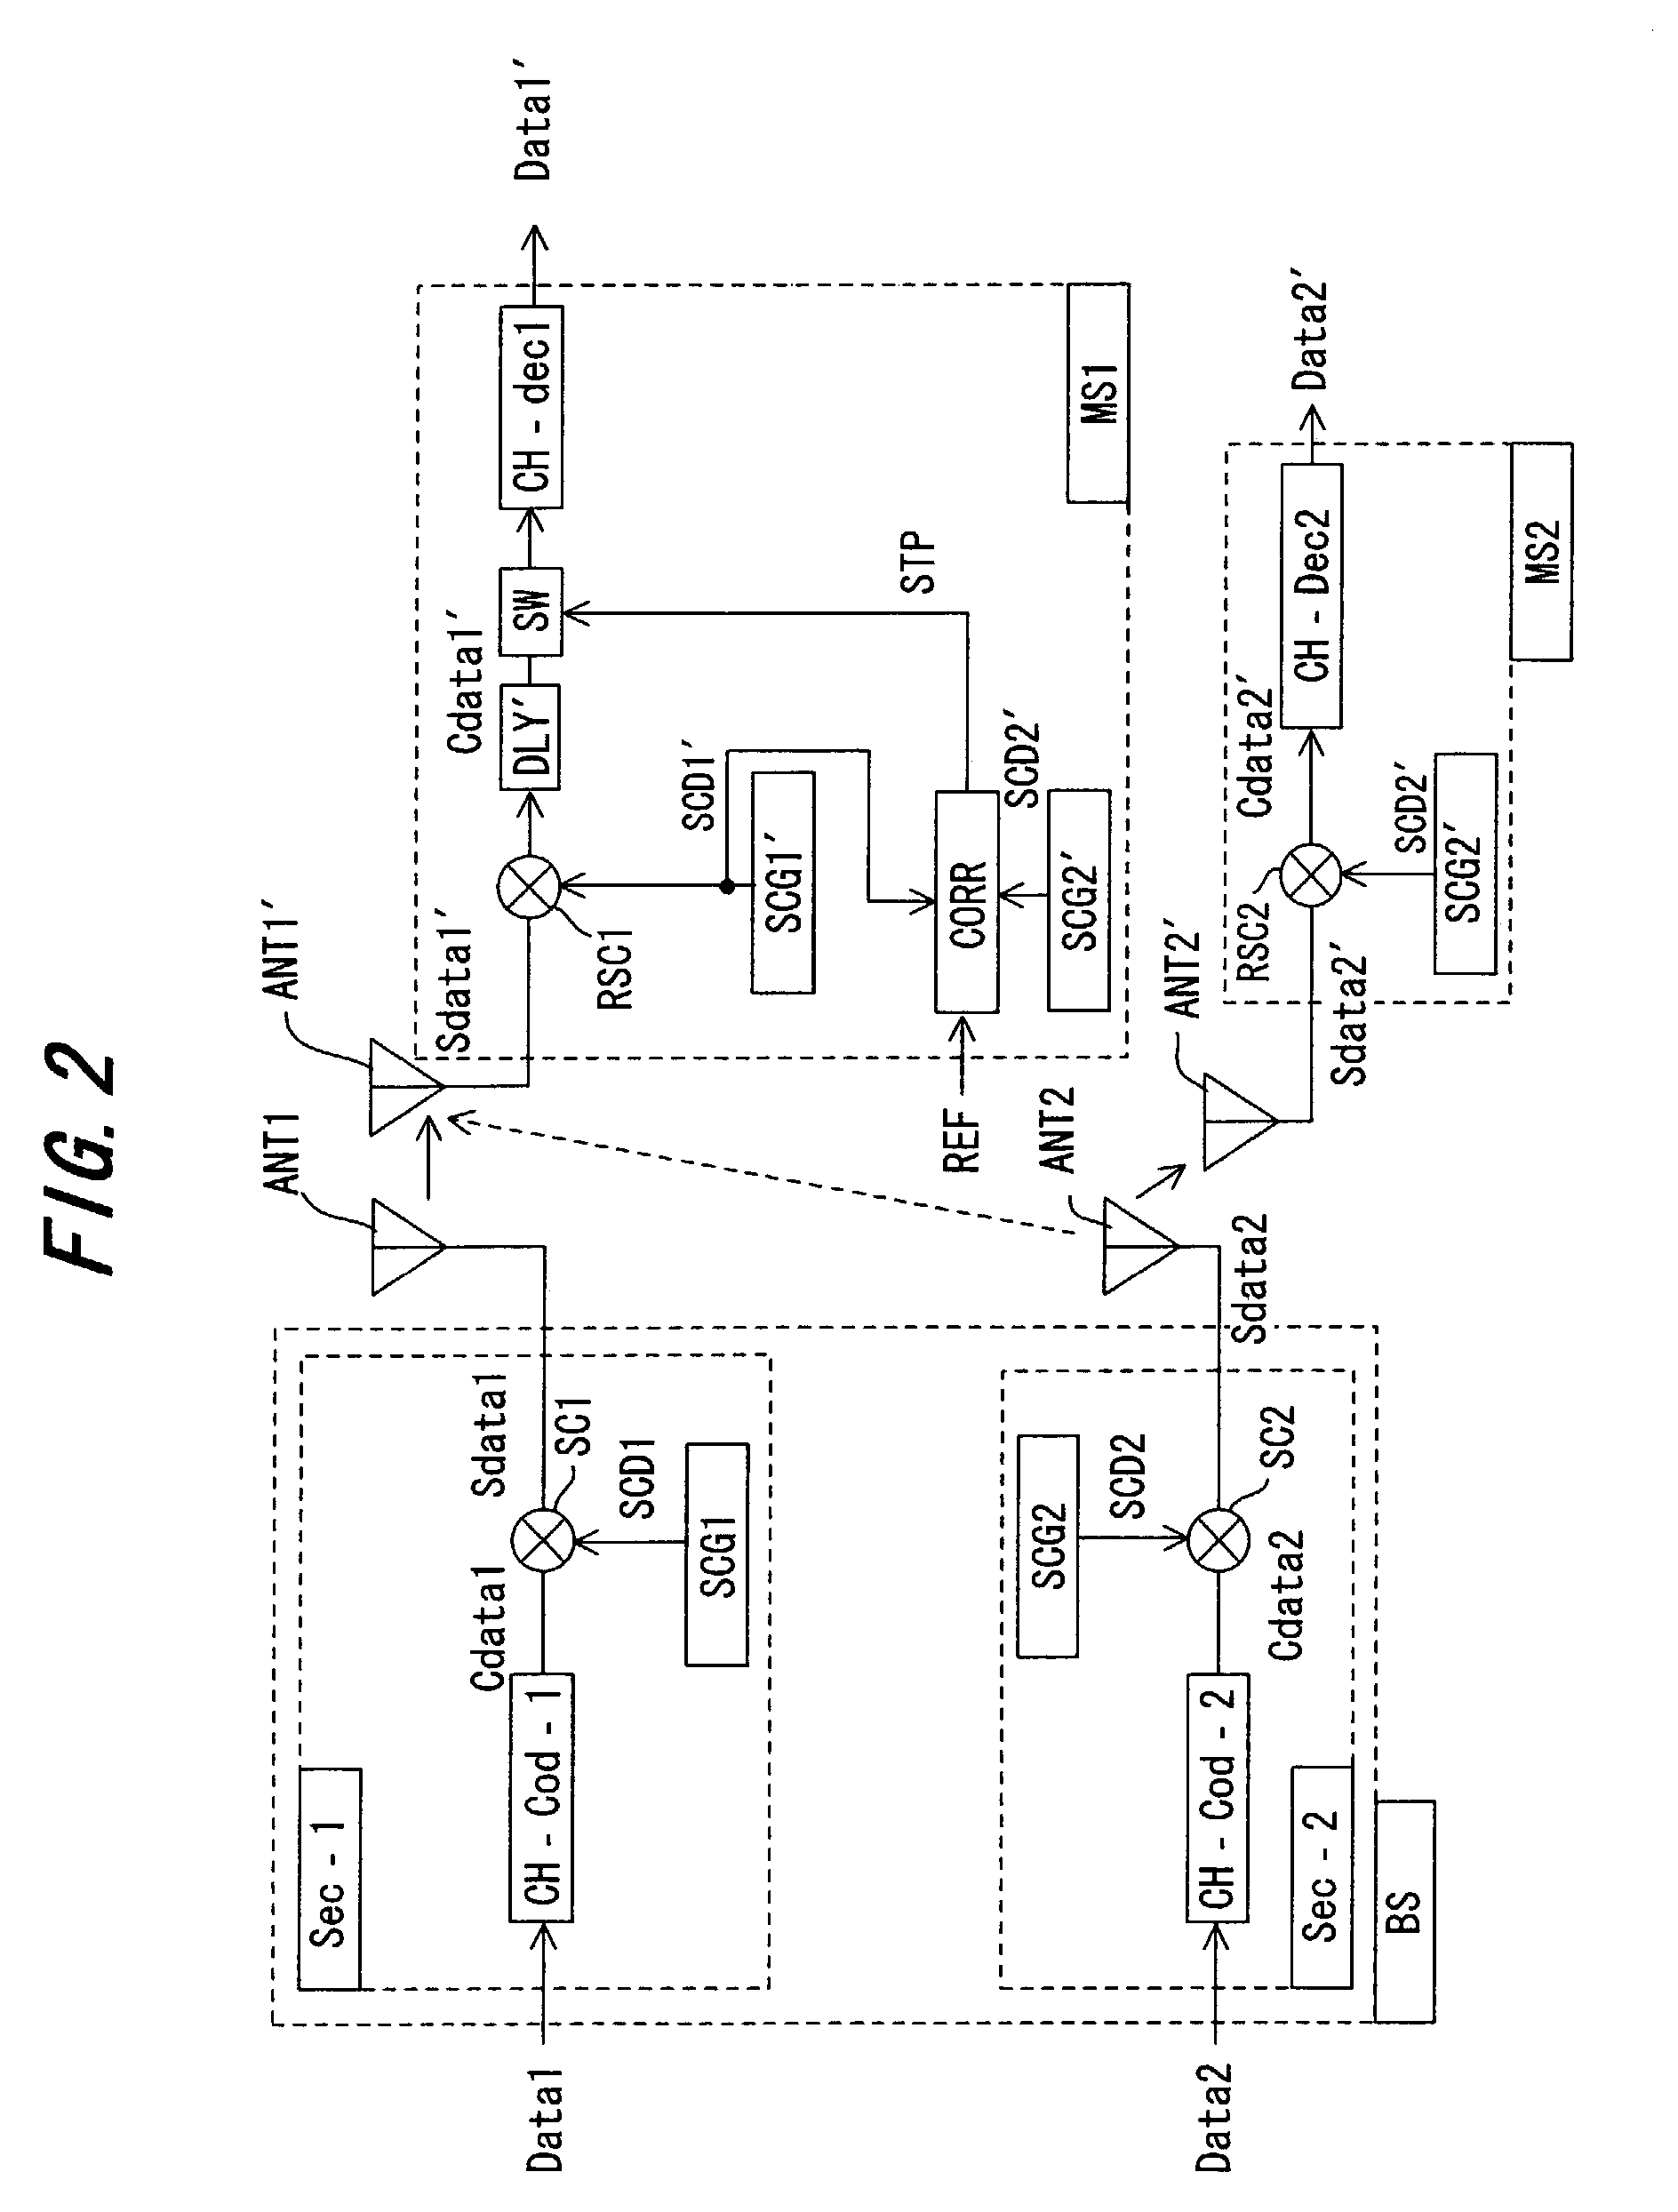 Code division multiple access signal receiving apparatus